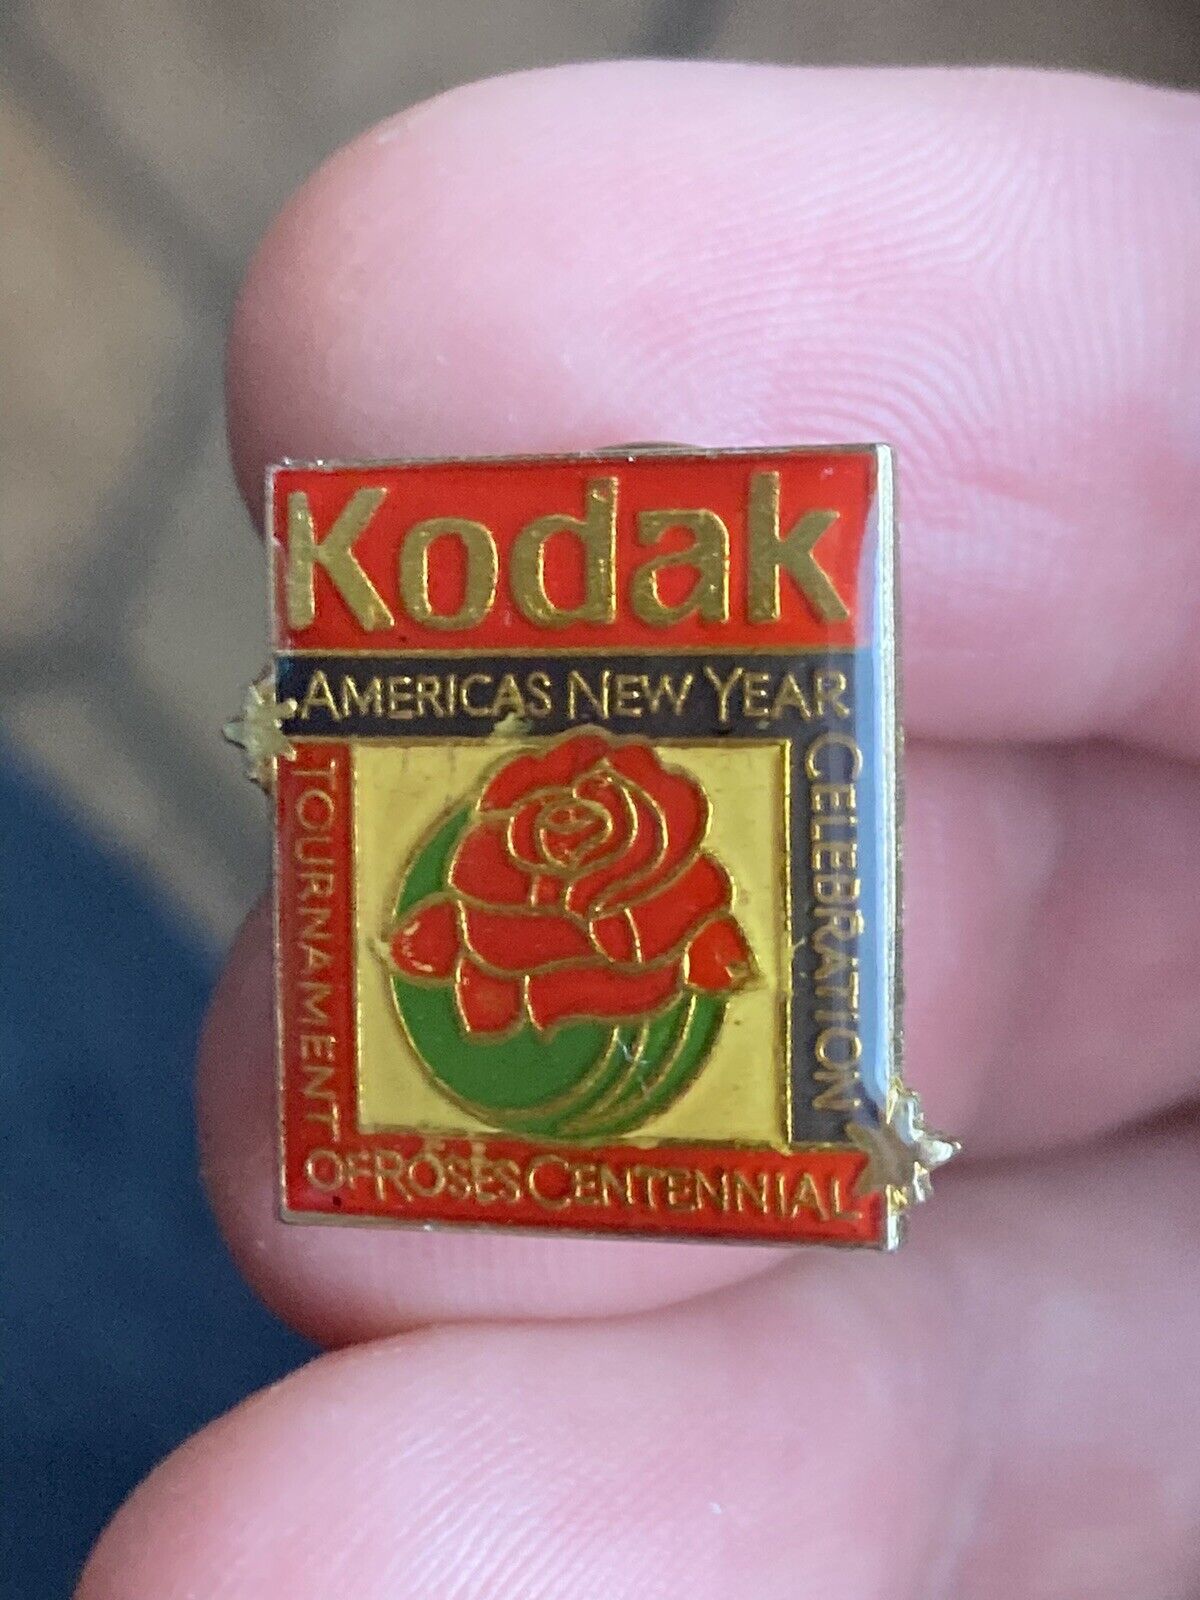 Kodak New York roses centennial Lapel Pin Vest Collectible EUC K515